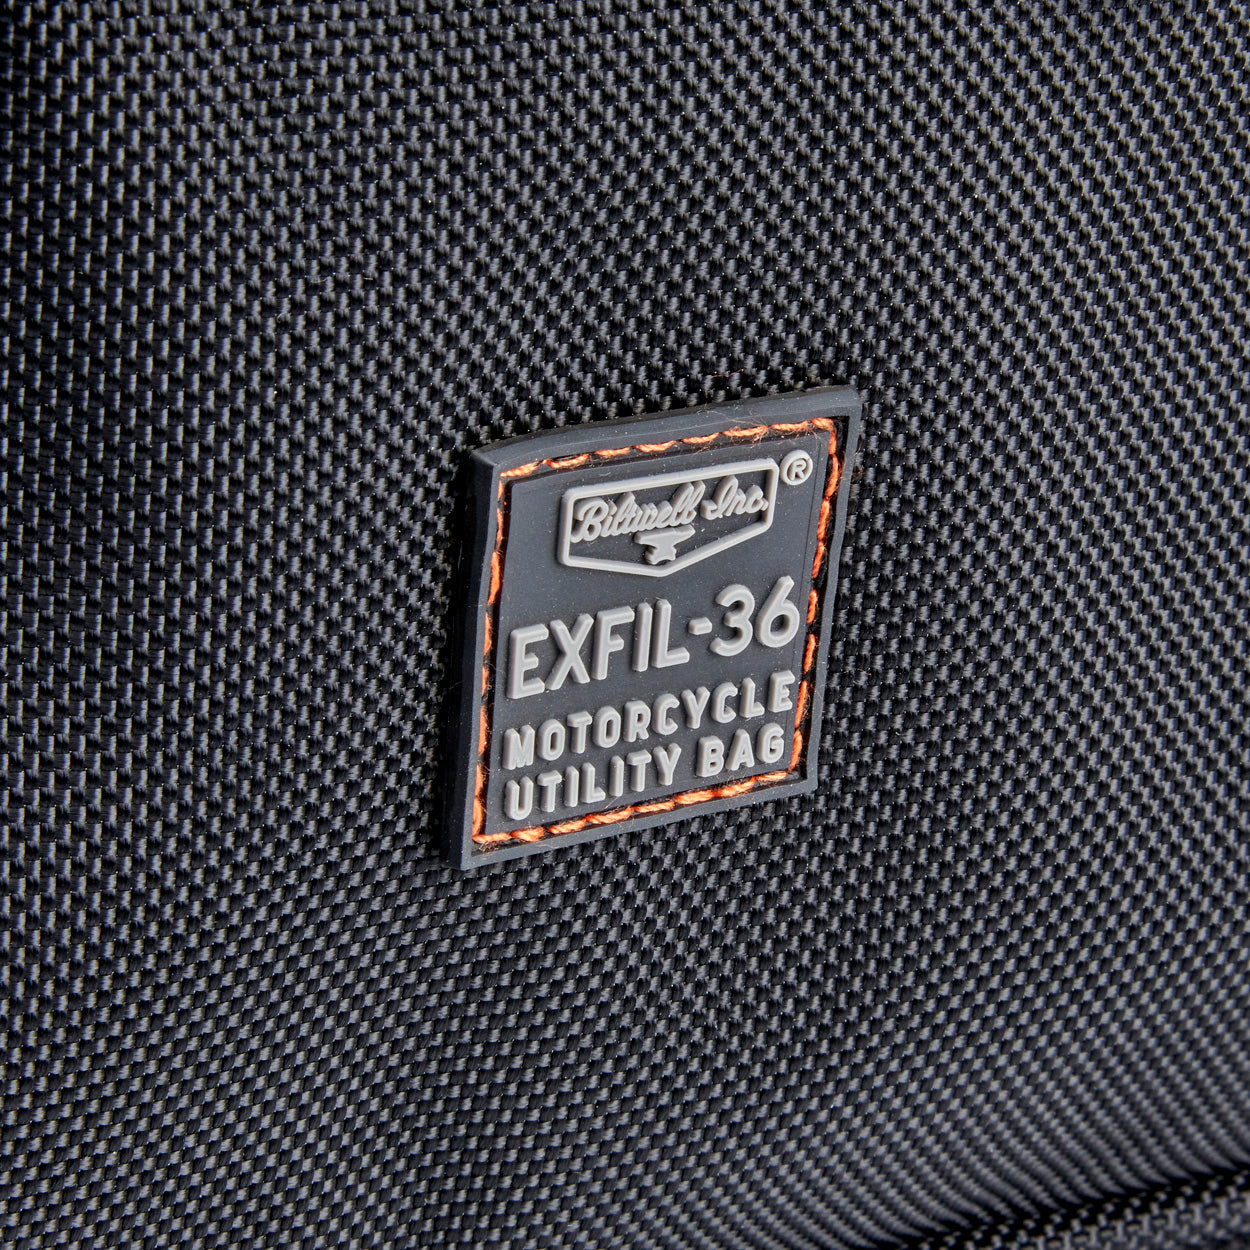 EXFIL-36 Saddlebag Replacement